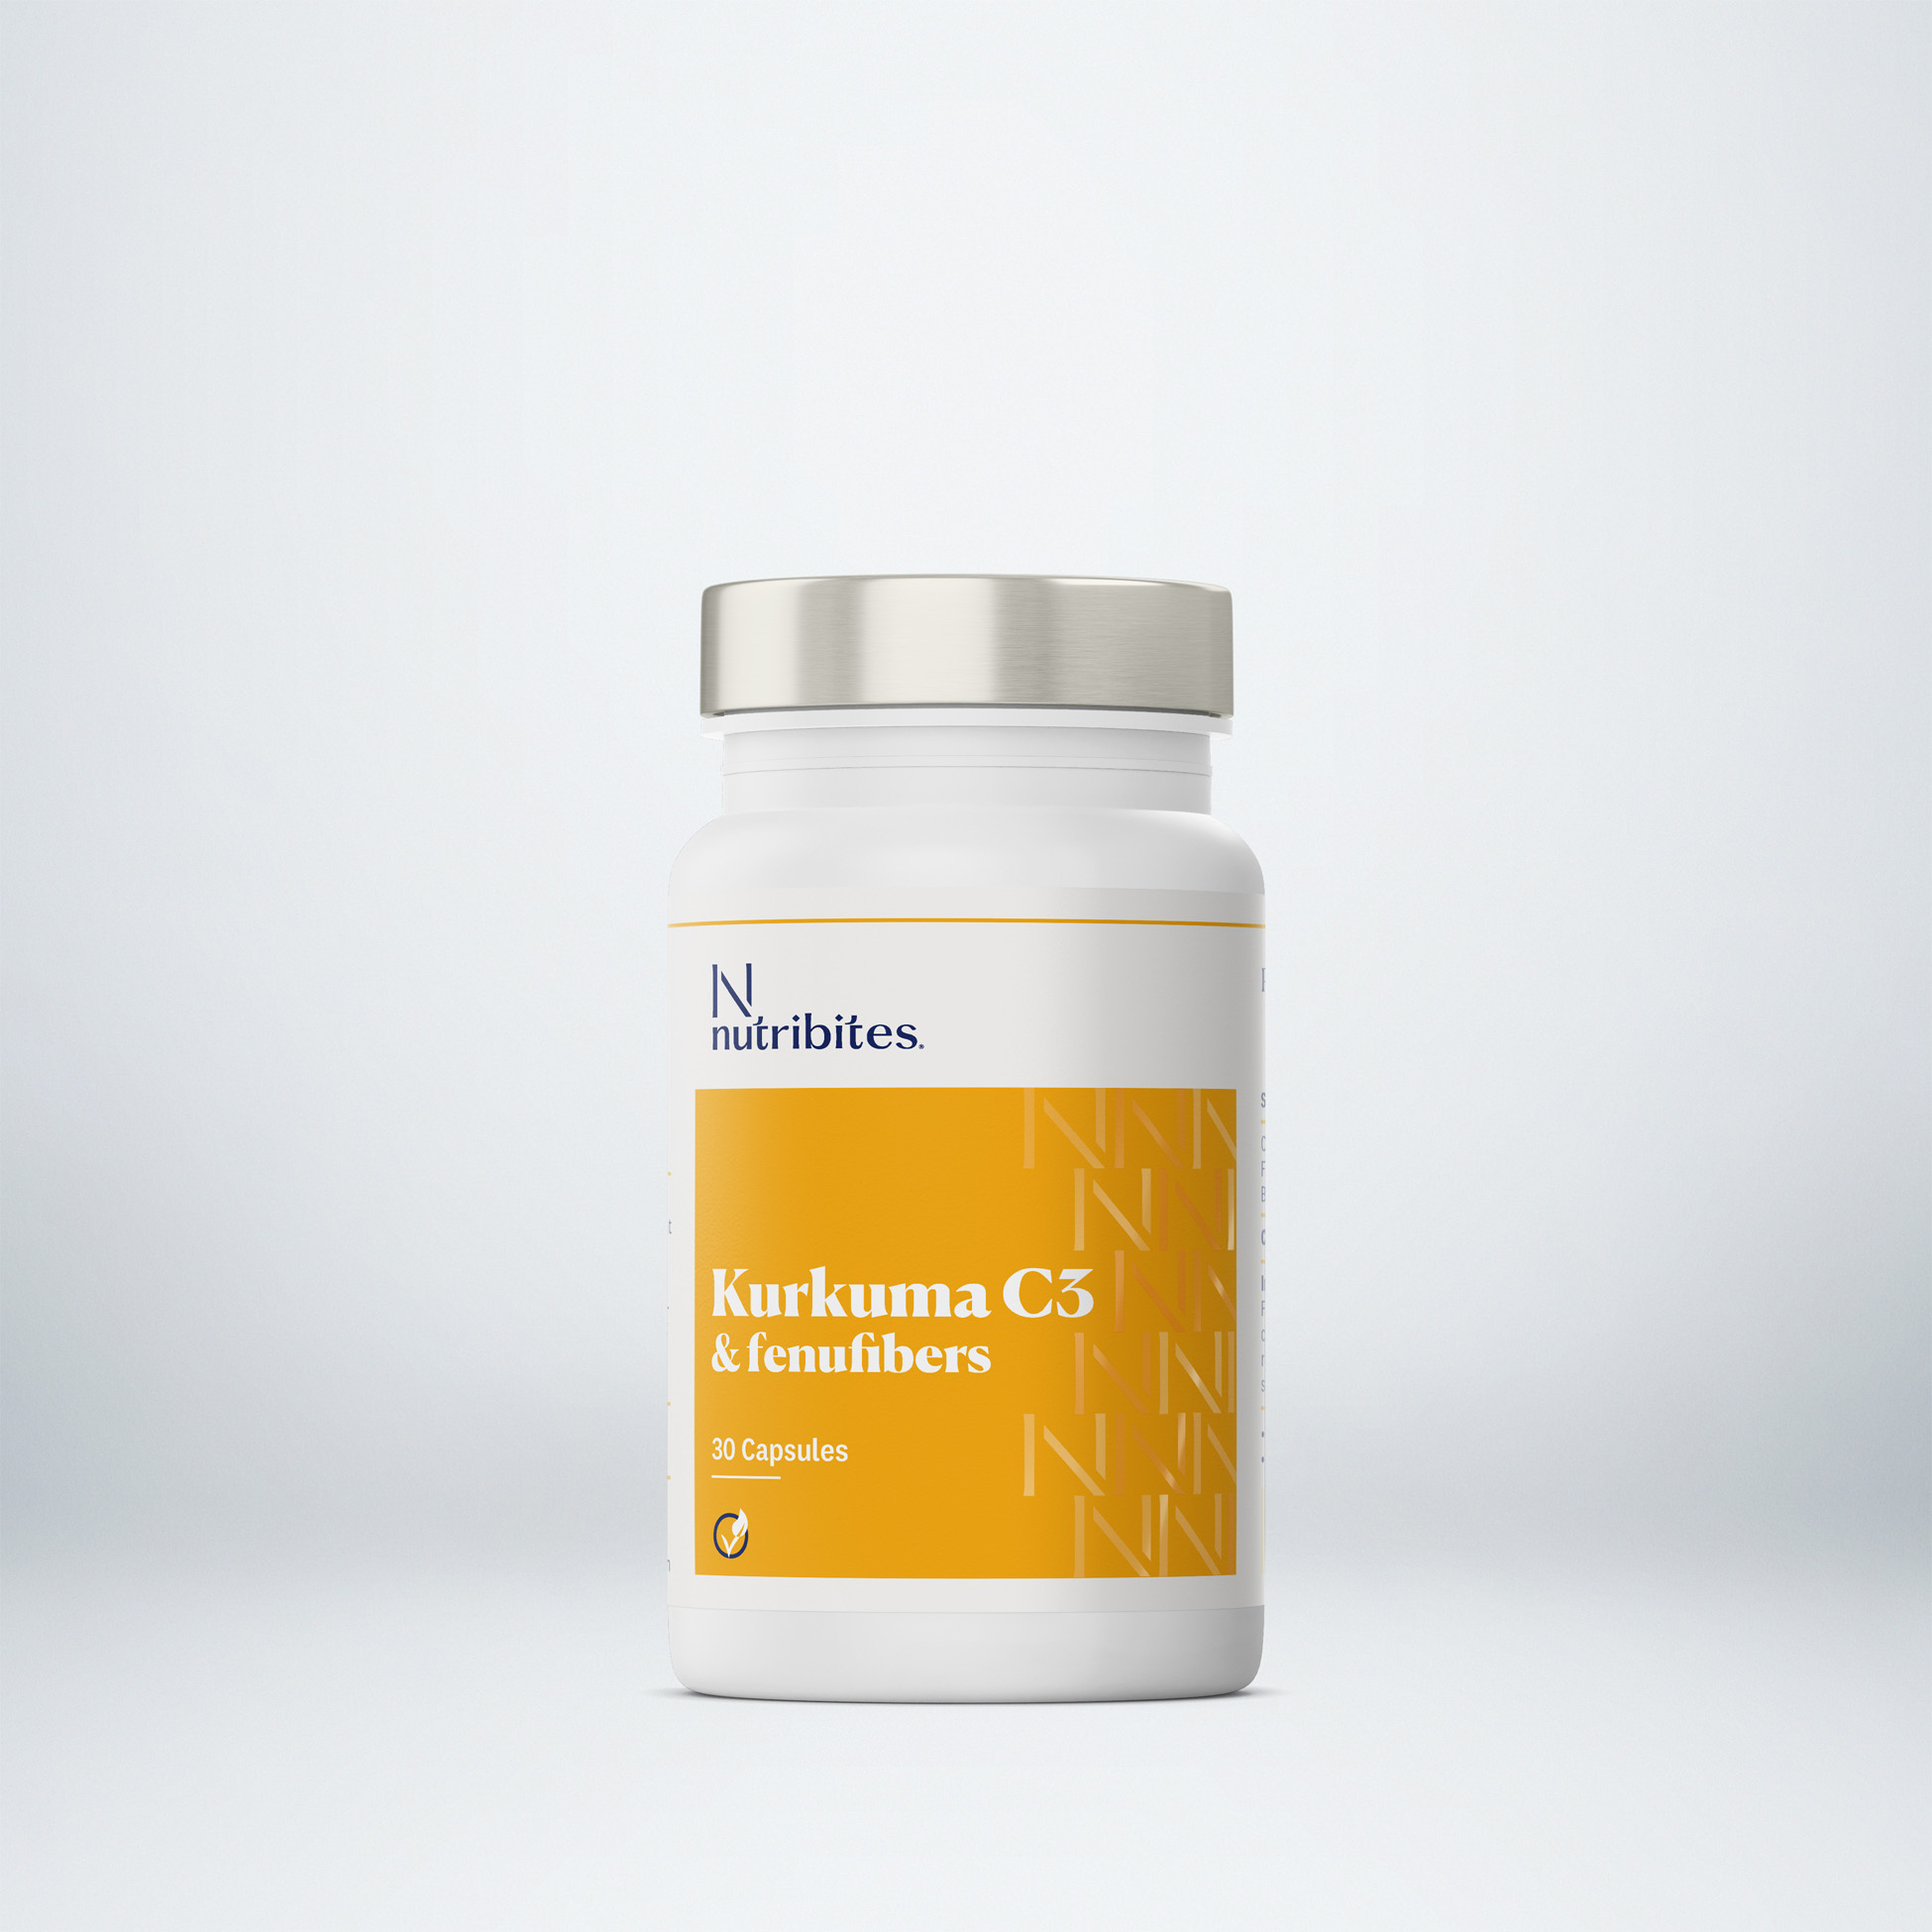  Kurkuma C3 - 30 vegan capsules - Zuiver supplement zonder onnodige toevoegingen